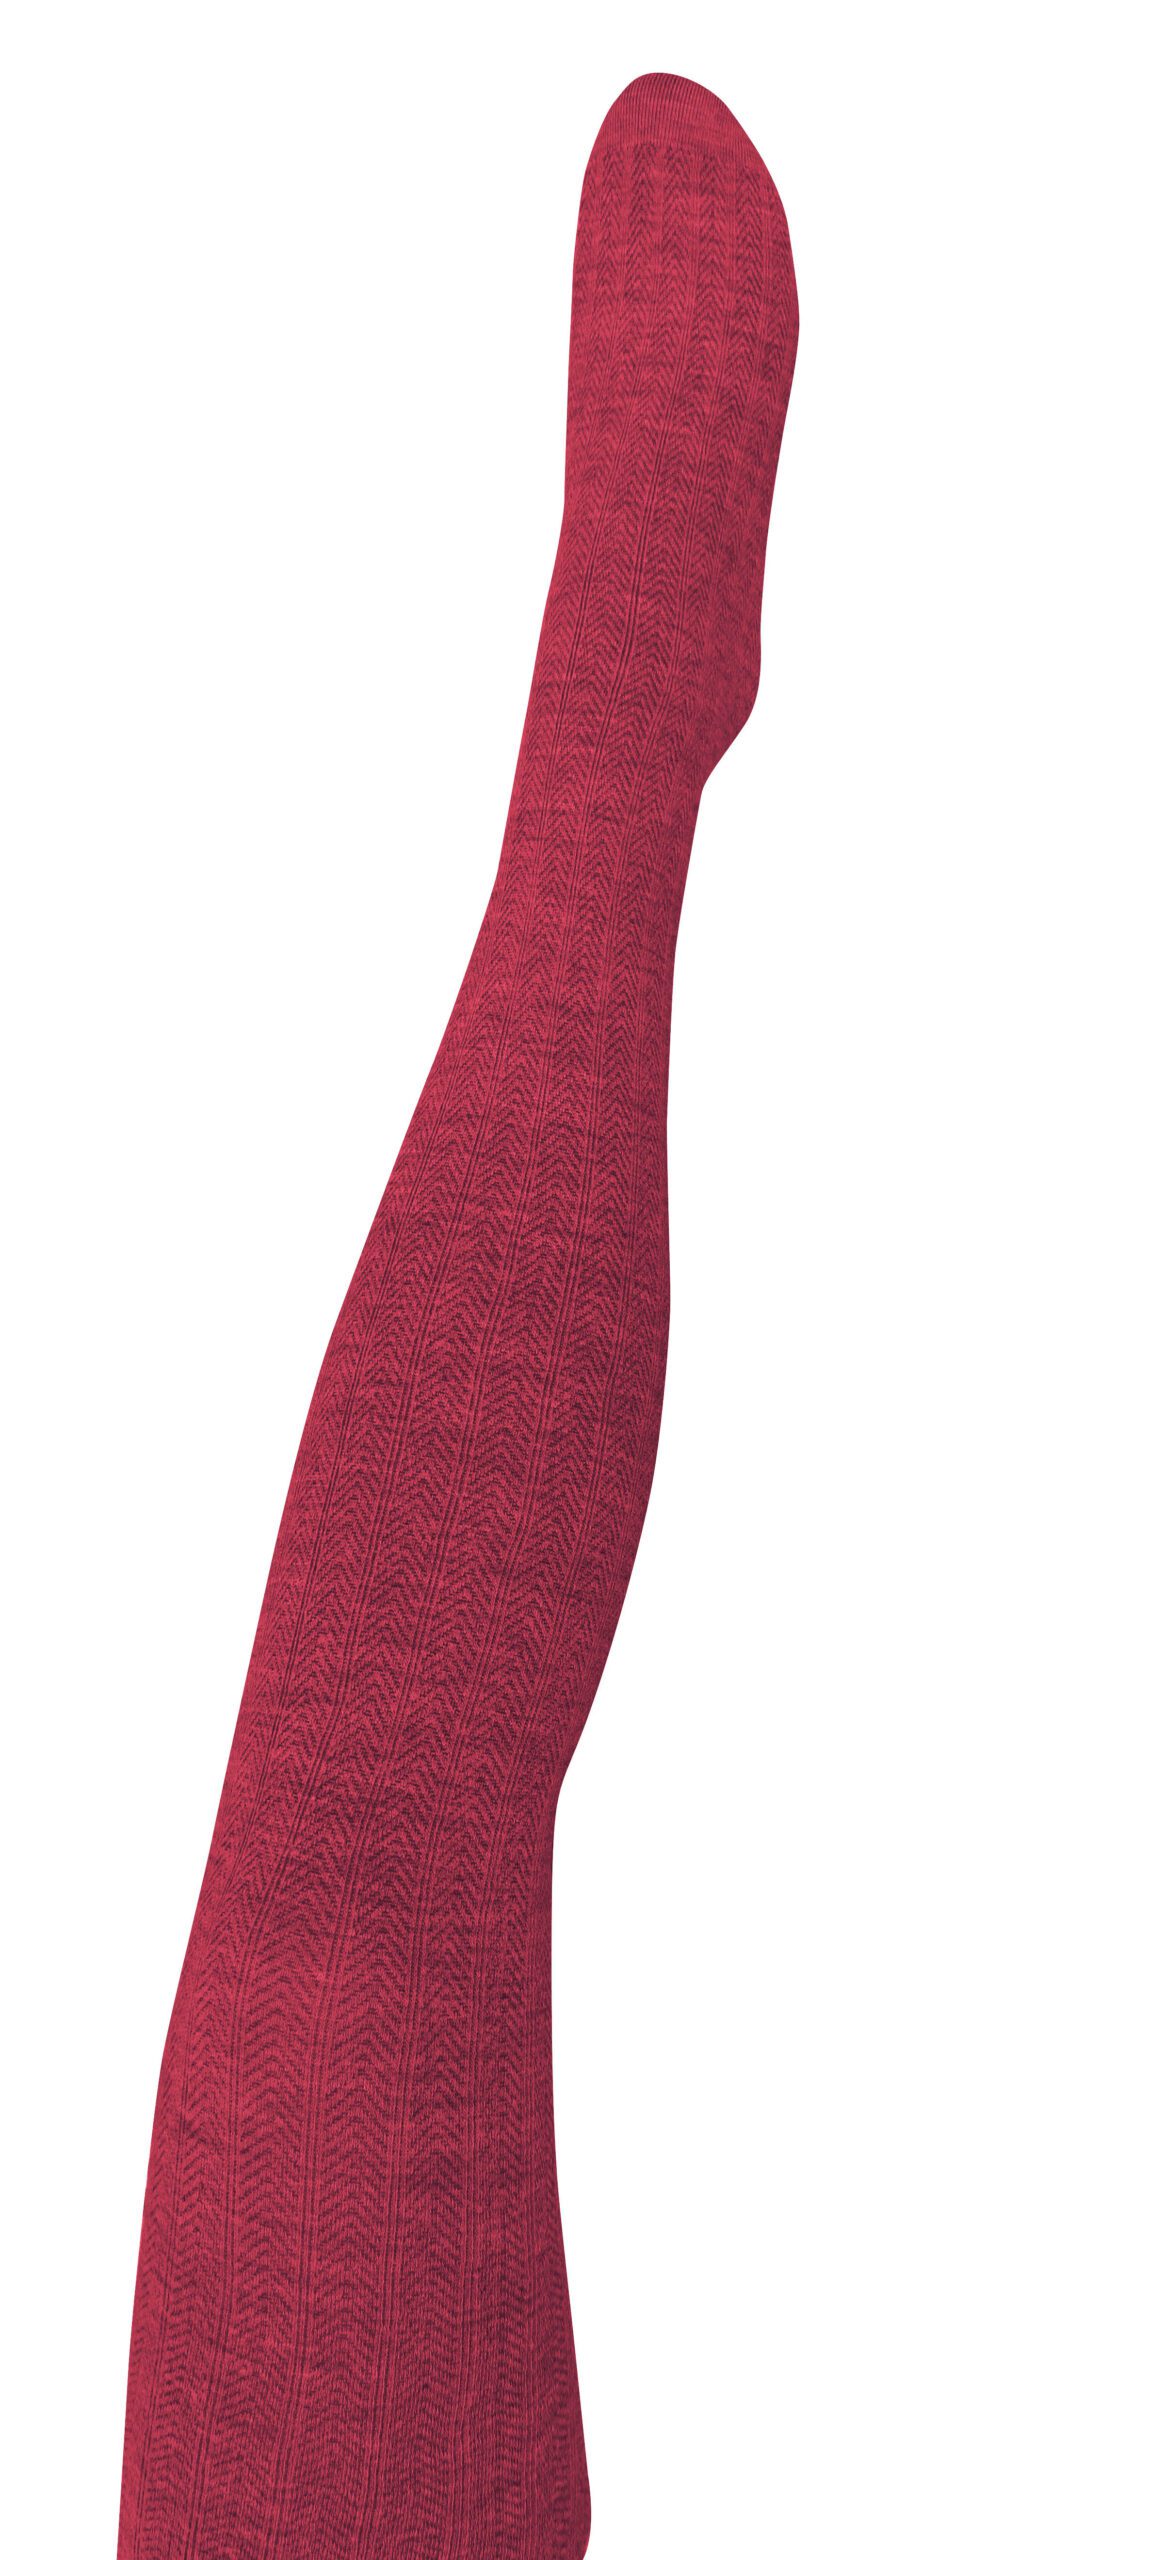 T04 - 'Martini Crimson' Wool Tights - Tightology